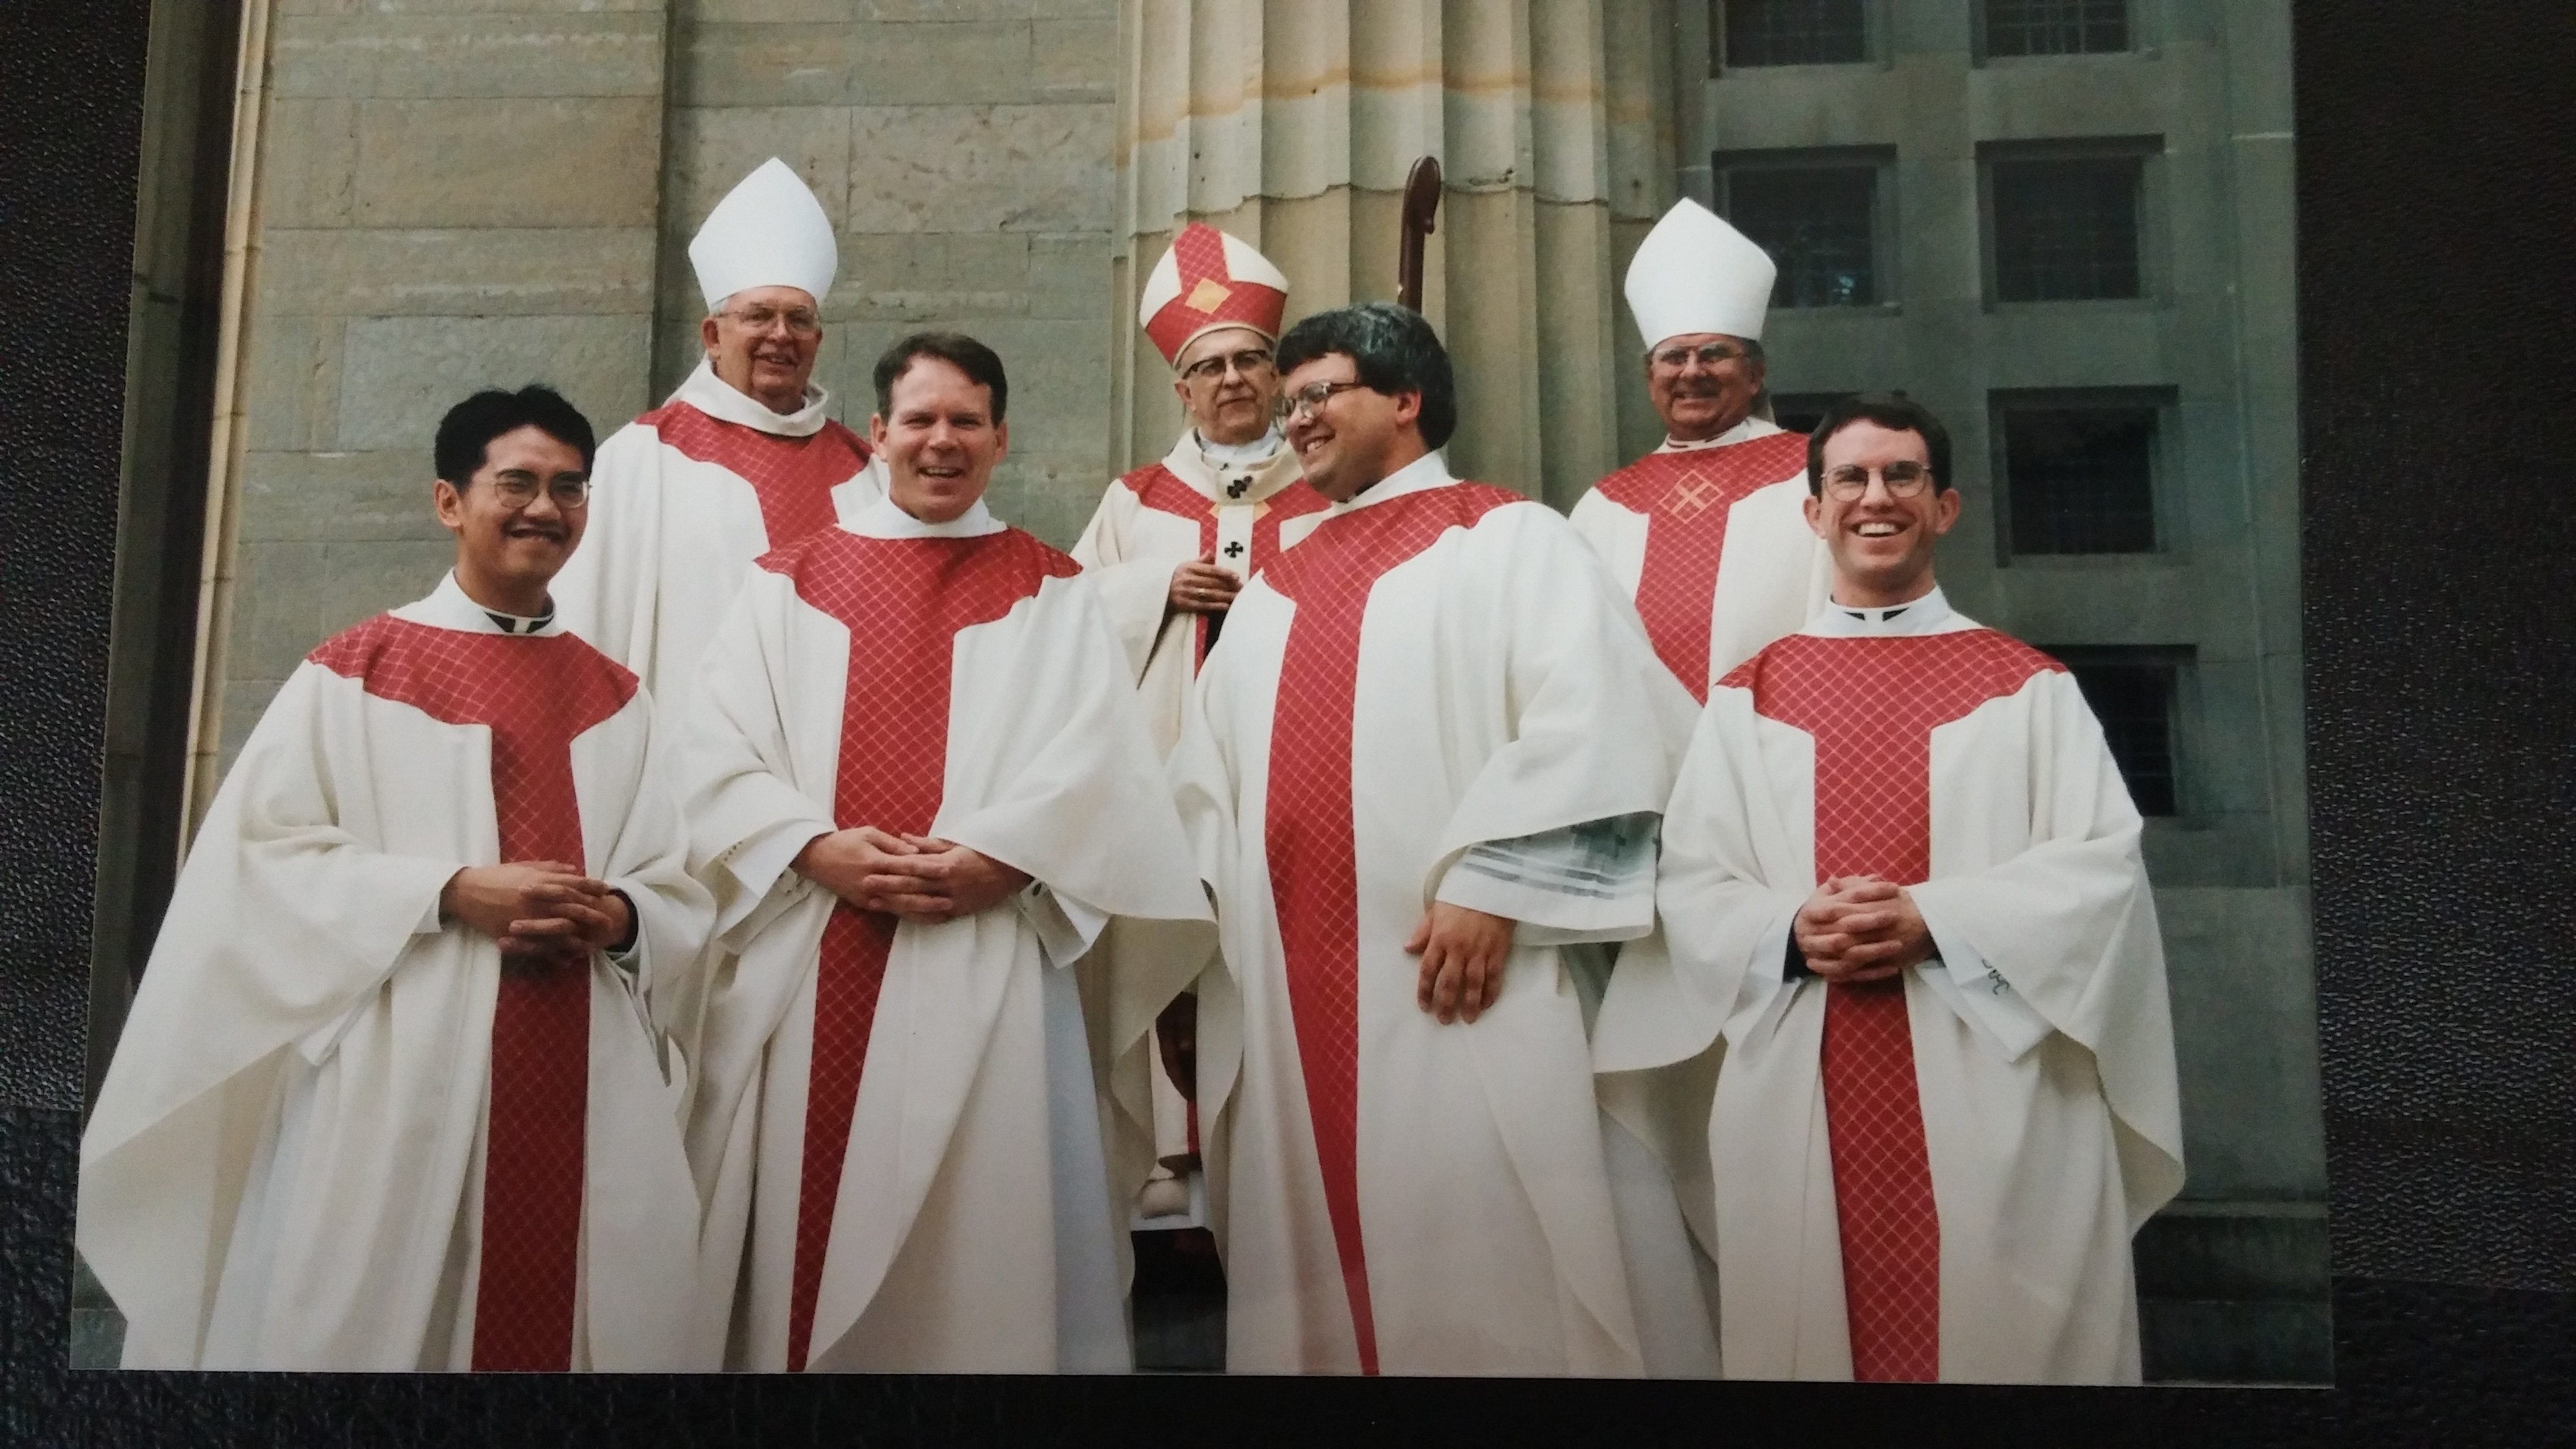 From Left to Right, Fr. Tuan Do, Auxilary Bishop Kaising, Fr. James Simons, Archbishop Daniel Pilarczyk, Fr. Steven Kolde, Auxilary Bishop Moeddel, Fr. James Hoffbauer